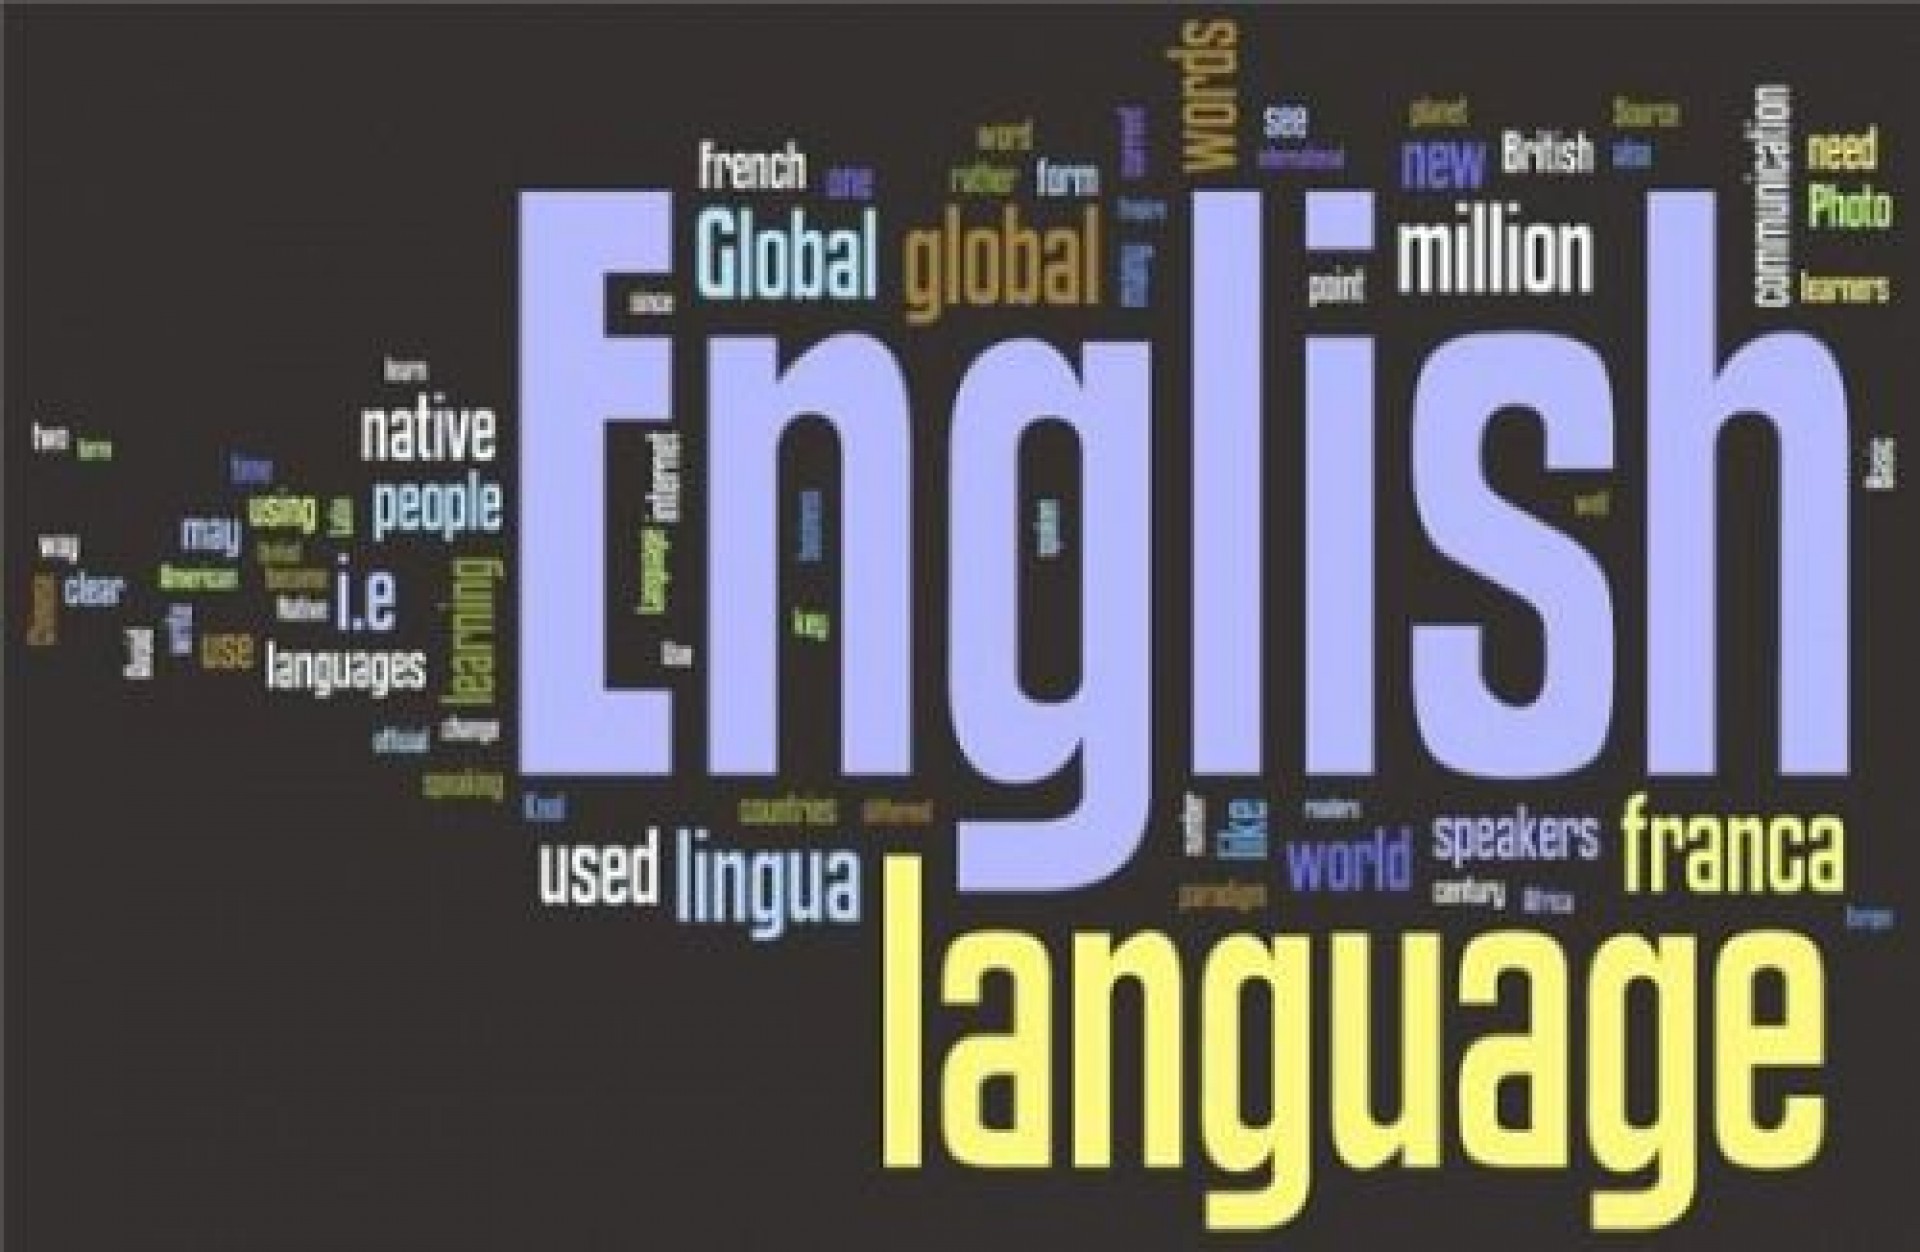 World well english. Глобальный английский. Нейтив Инглиш. Английский язык глобальный язык. English is a Global language.